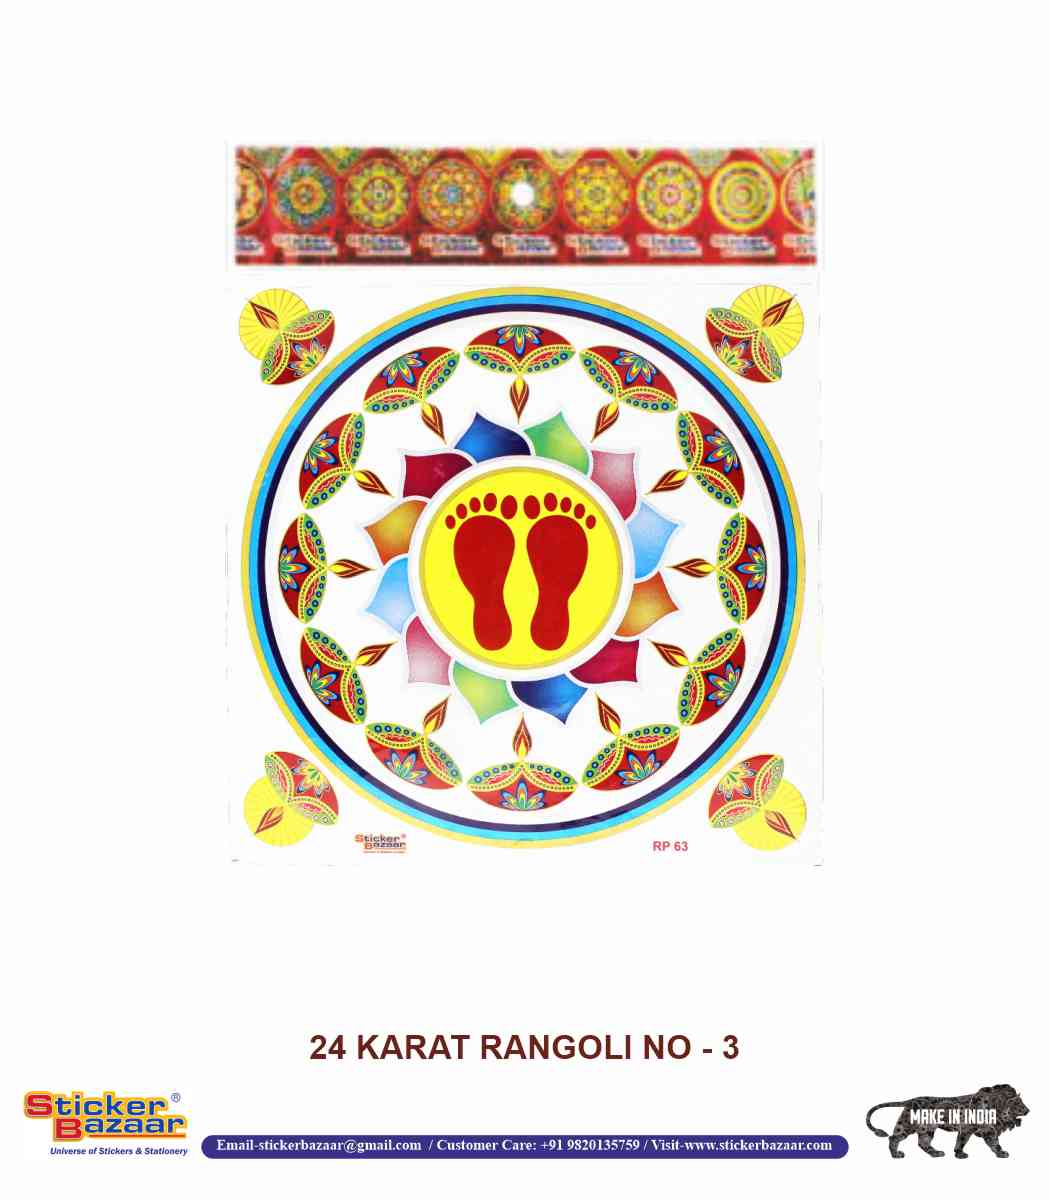 Sticker Bazaar 24 Karat Rangoli KR3 with Header